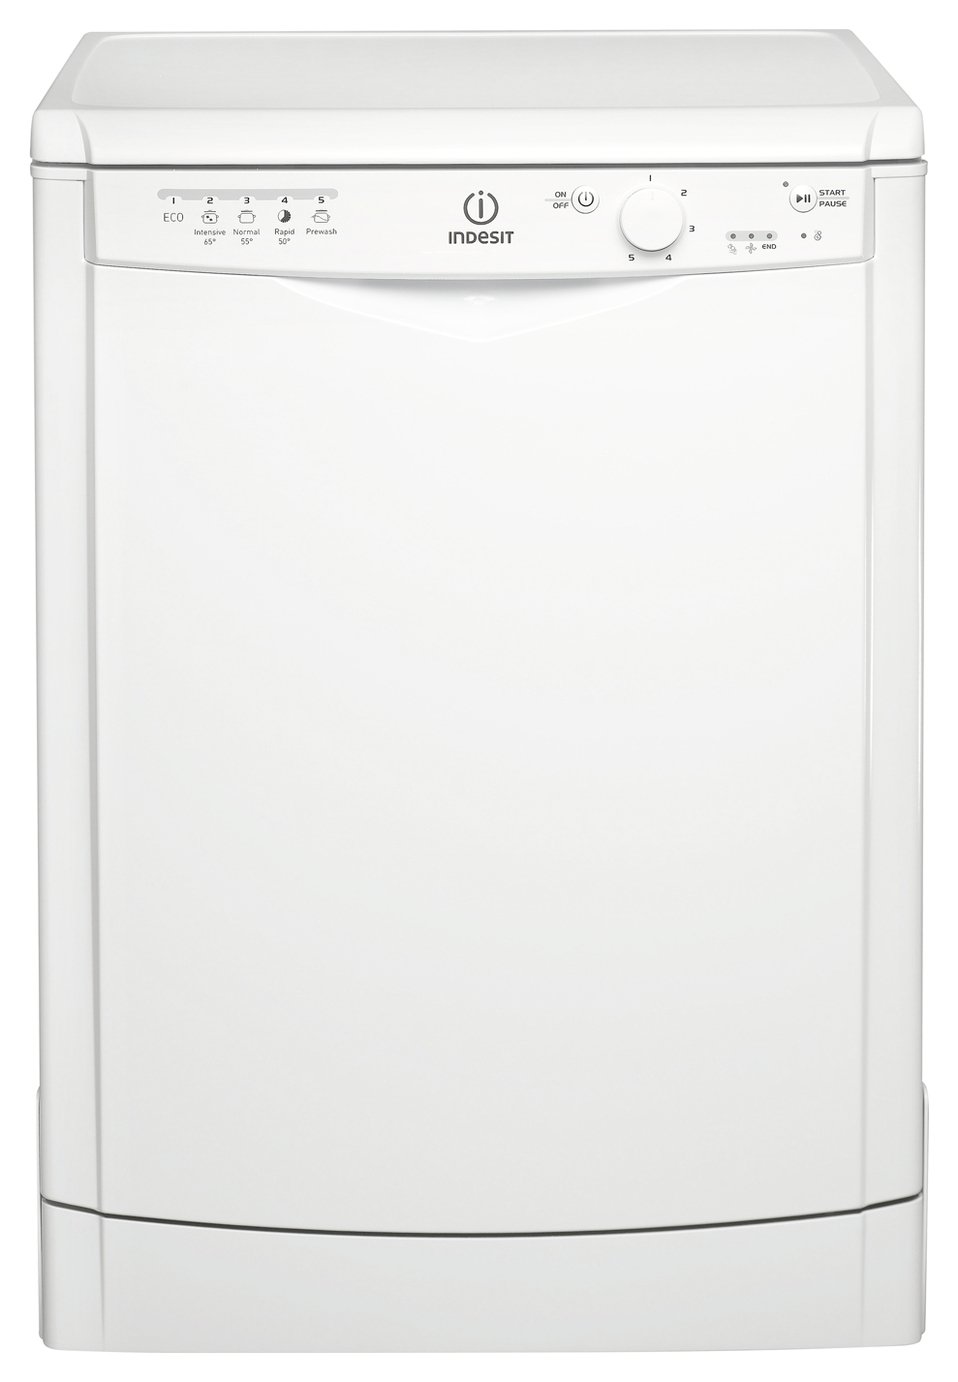 Indesit DFG15B1 Full Size Dishwasher - White